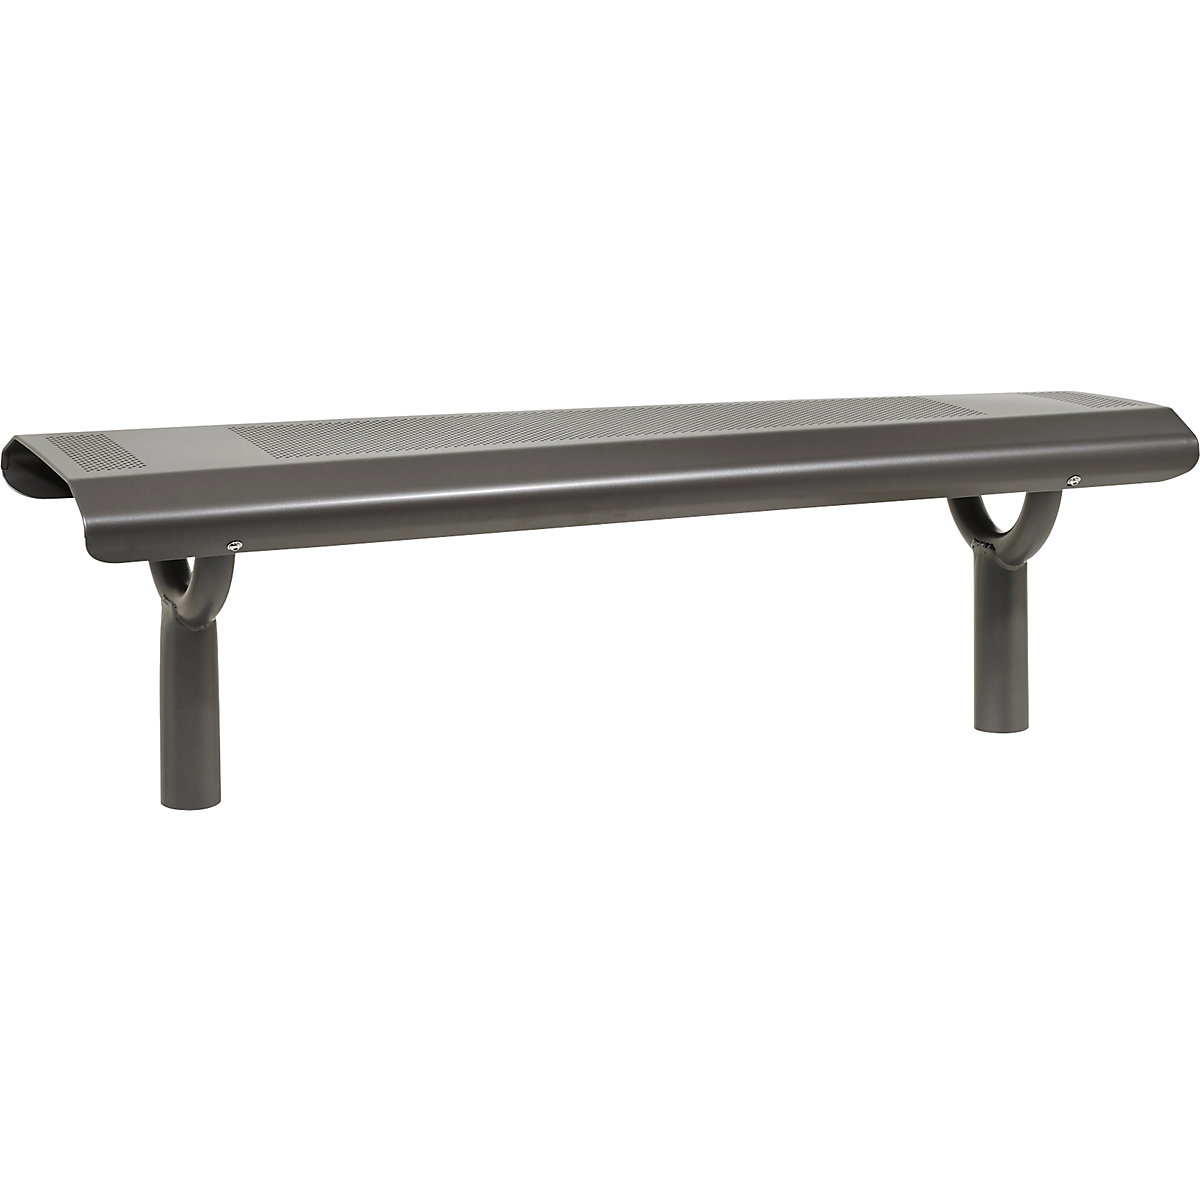 OSLO bench made of steel - PROCITY